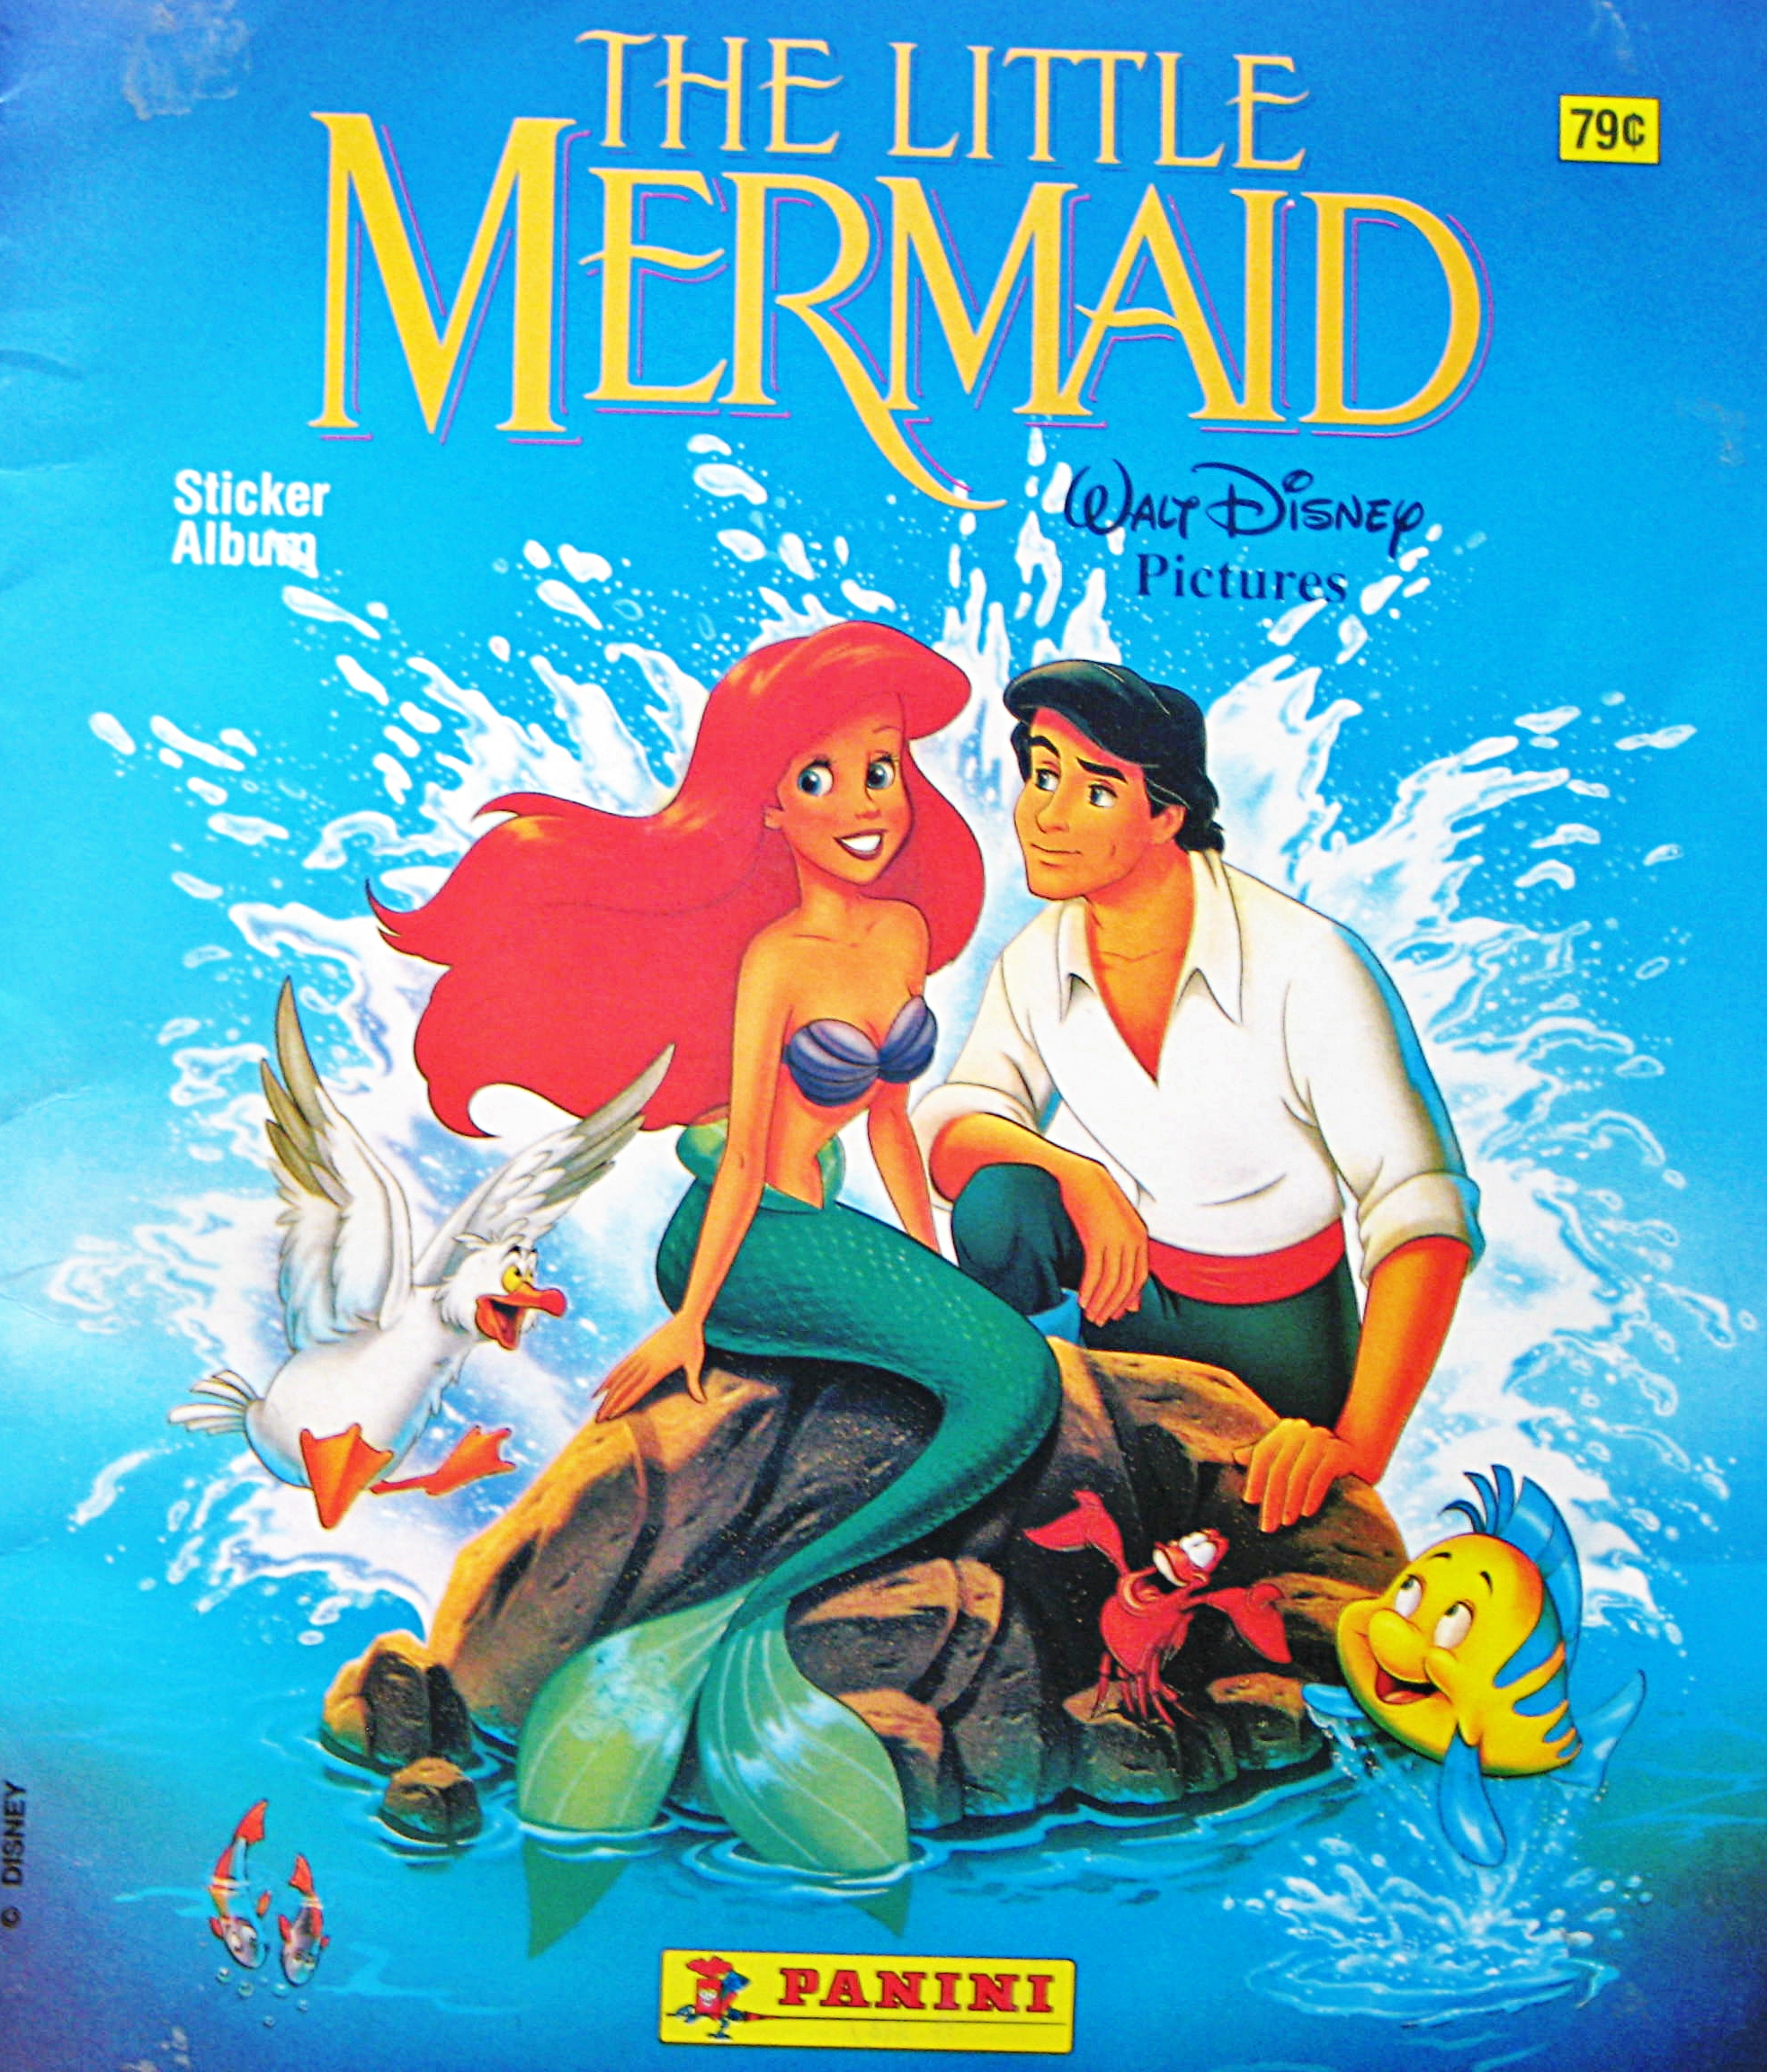 Disney Princess images The Little Mermaid  Sticker Album wallpaper 